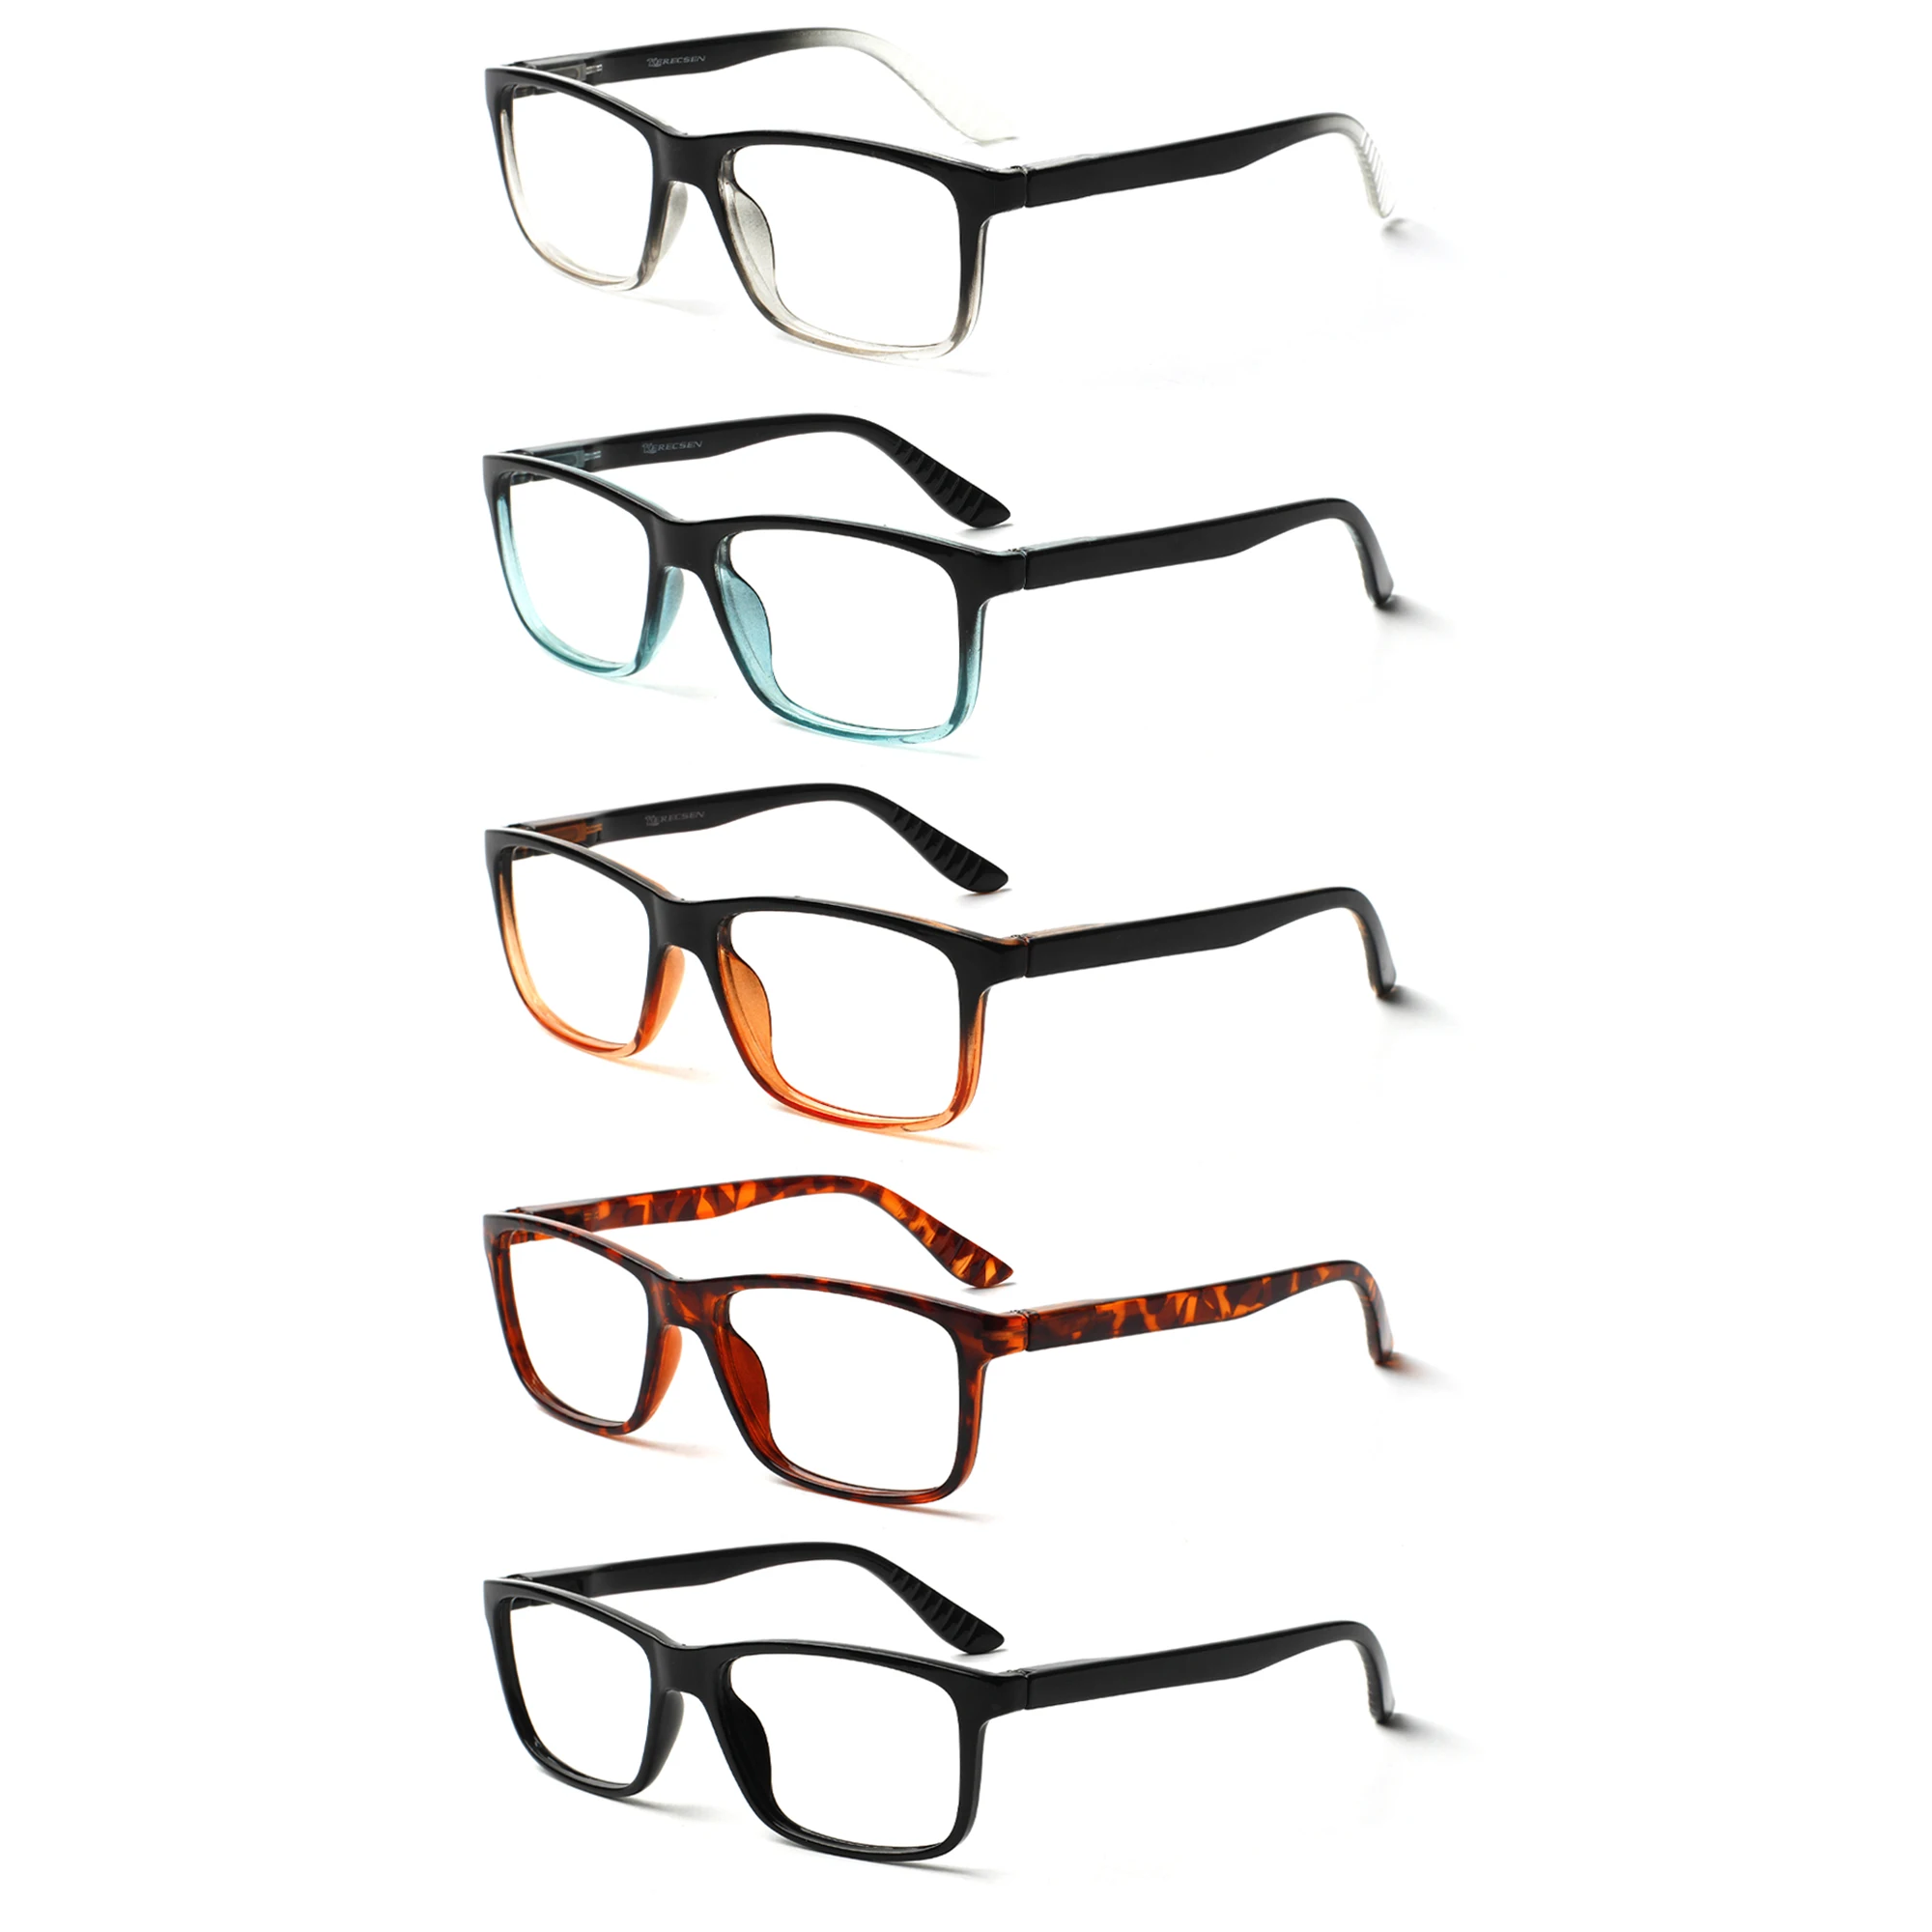 

Turezing Reading Glasses Anti-Reflective Spring Hinge Men Women Readers Eyeglasses Diopter +0, +50, +75, +100, +200...+600